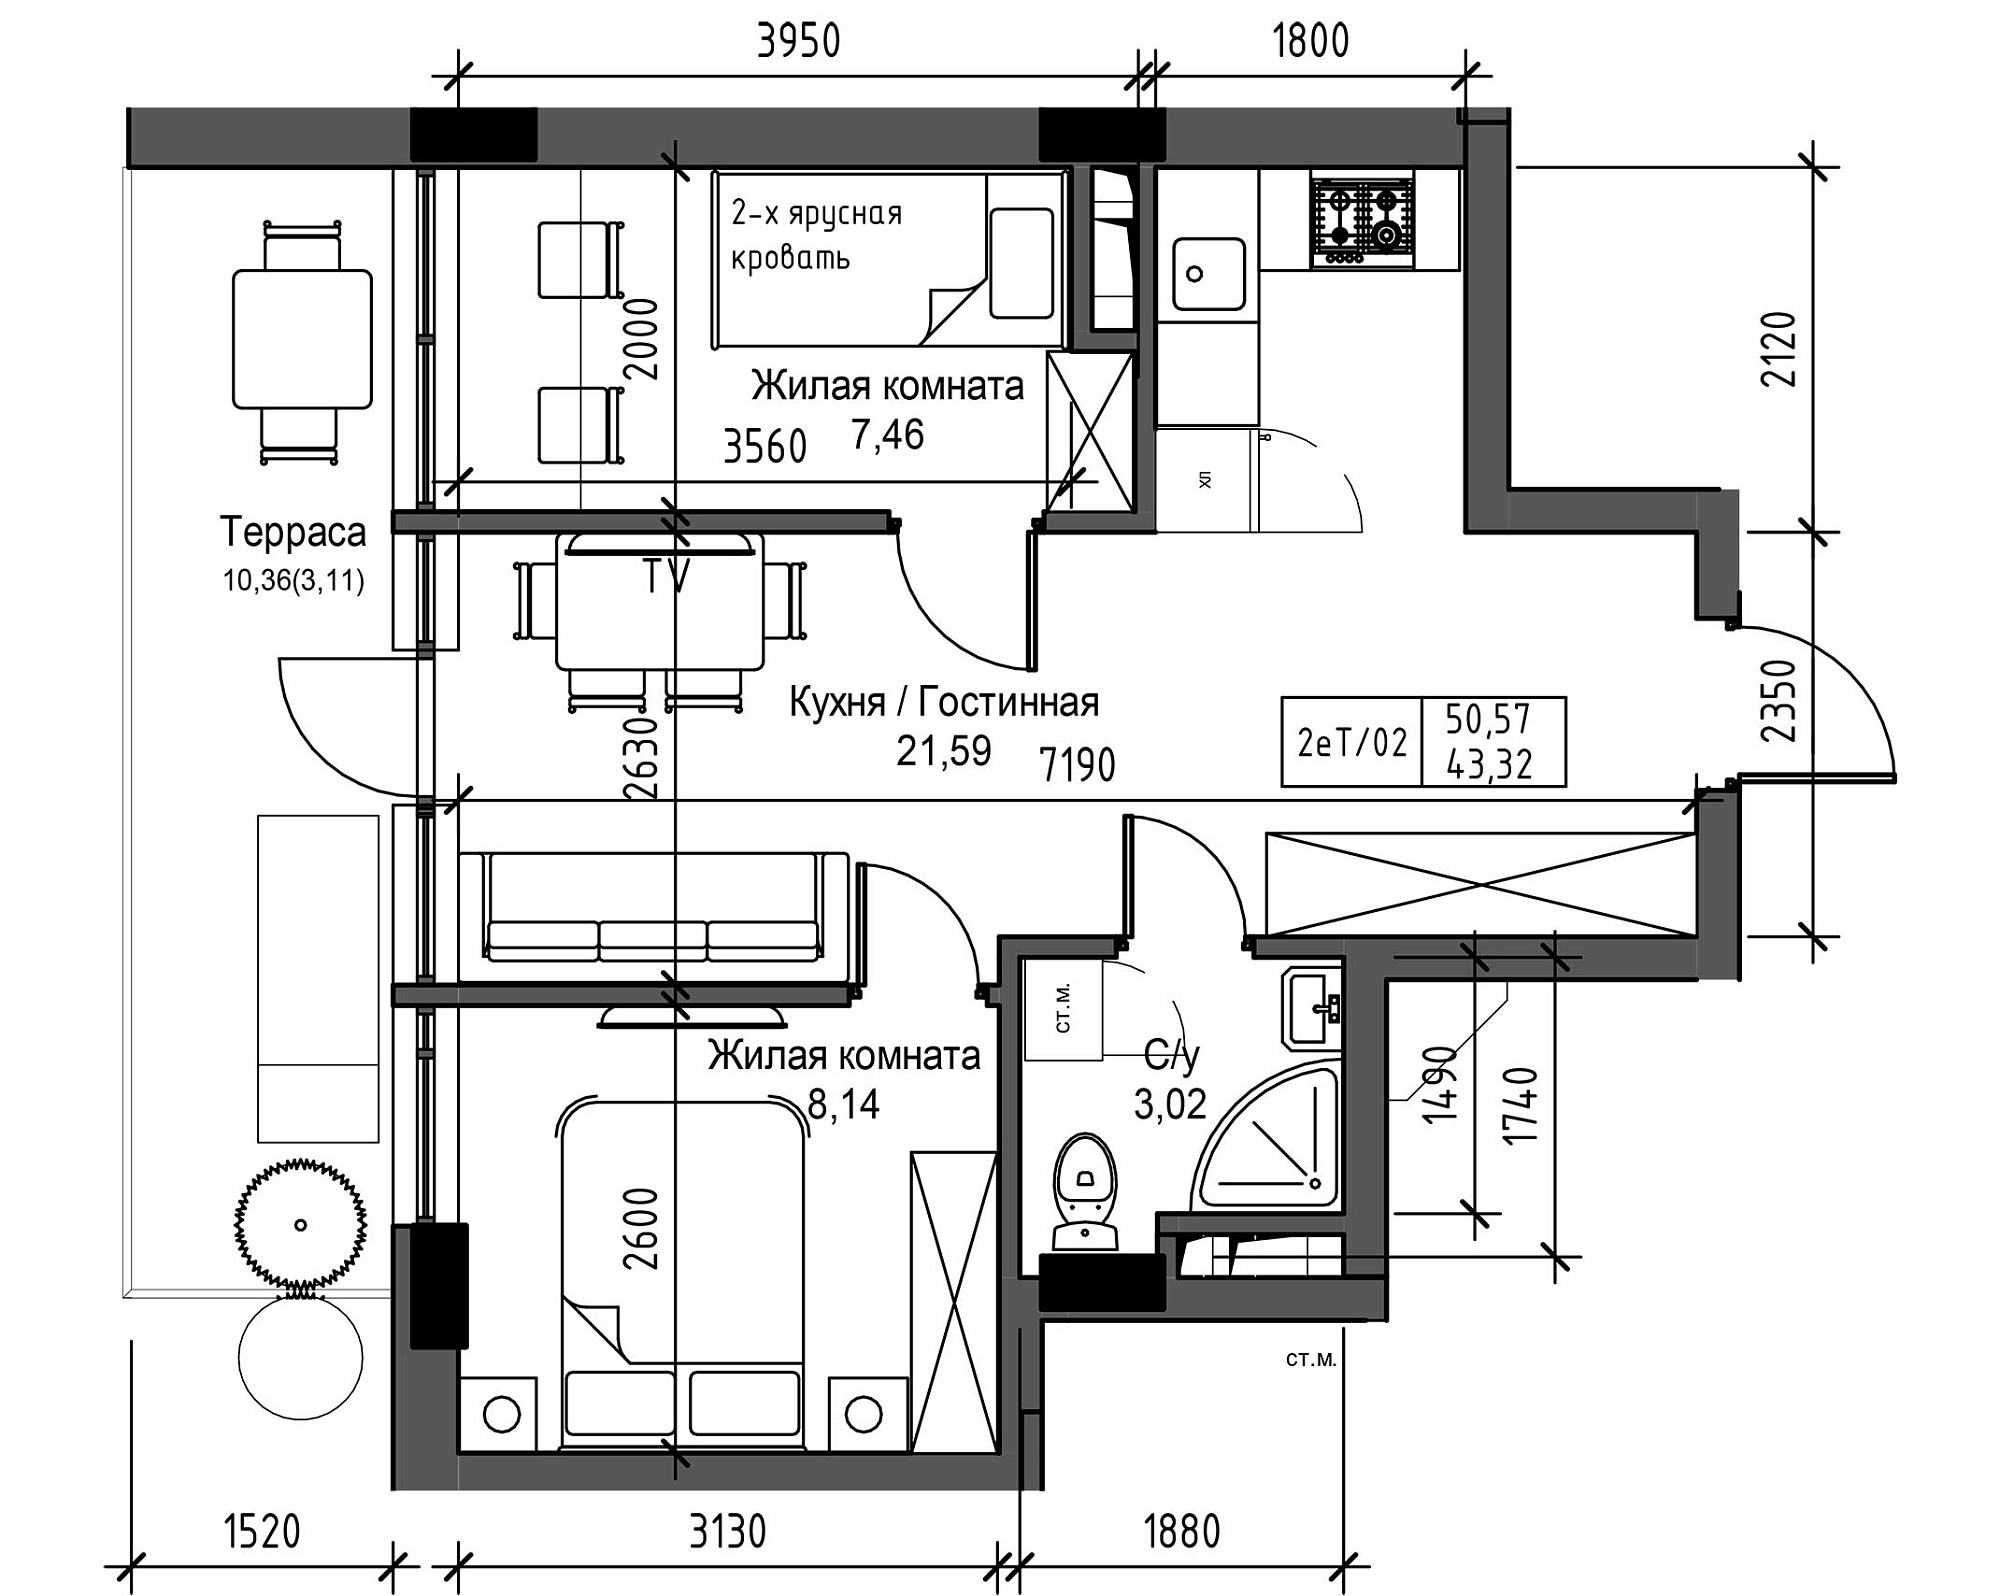 Planning 2-rm flats area 43.32m2, UM-003-07/0074.